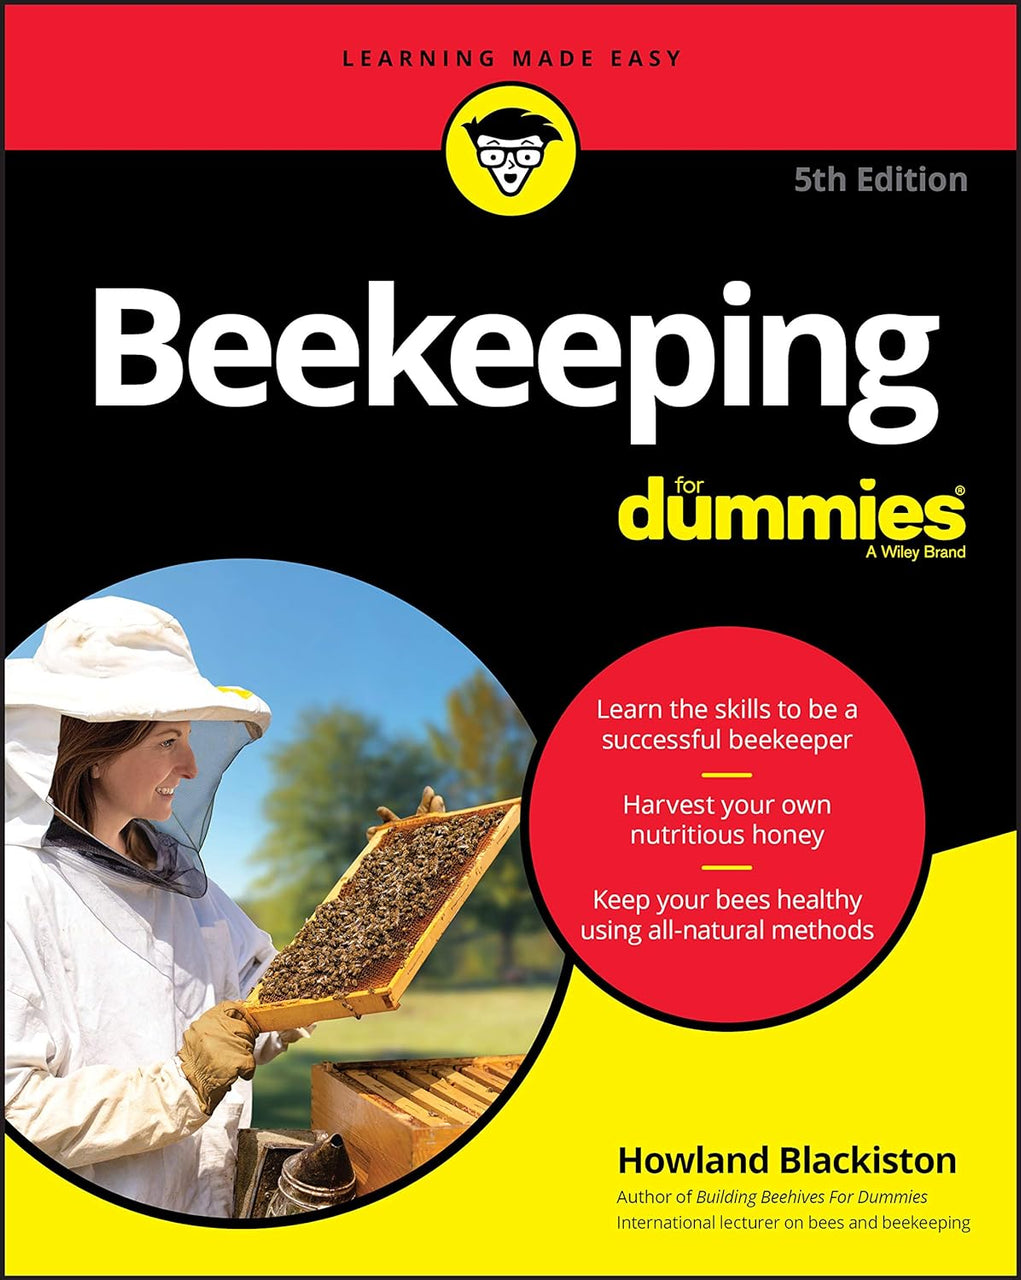 BKB13 Beekeeping for Dummies 5th Edition